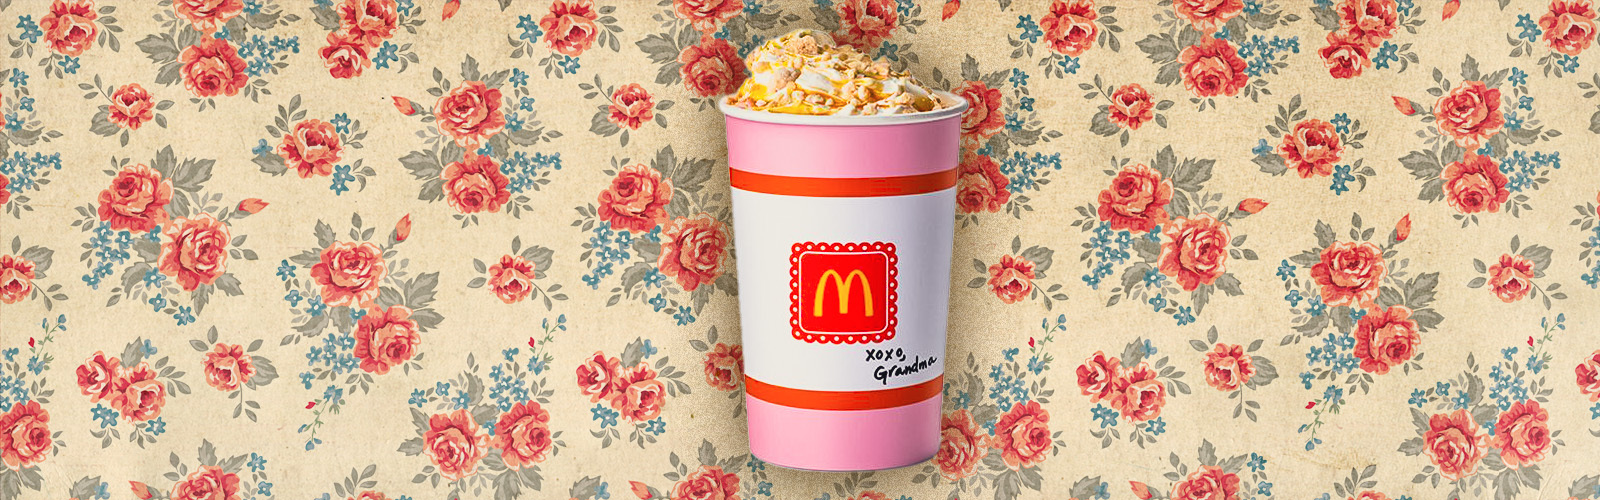 We Tried McDonald’s New Grandma McFlurry — Is It Any Good?